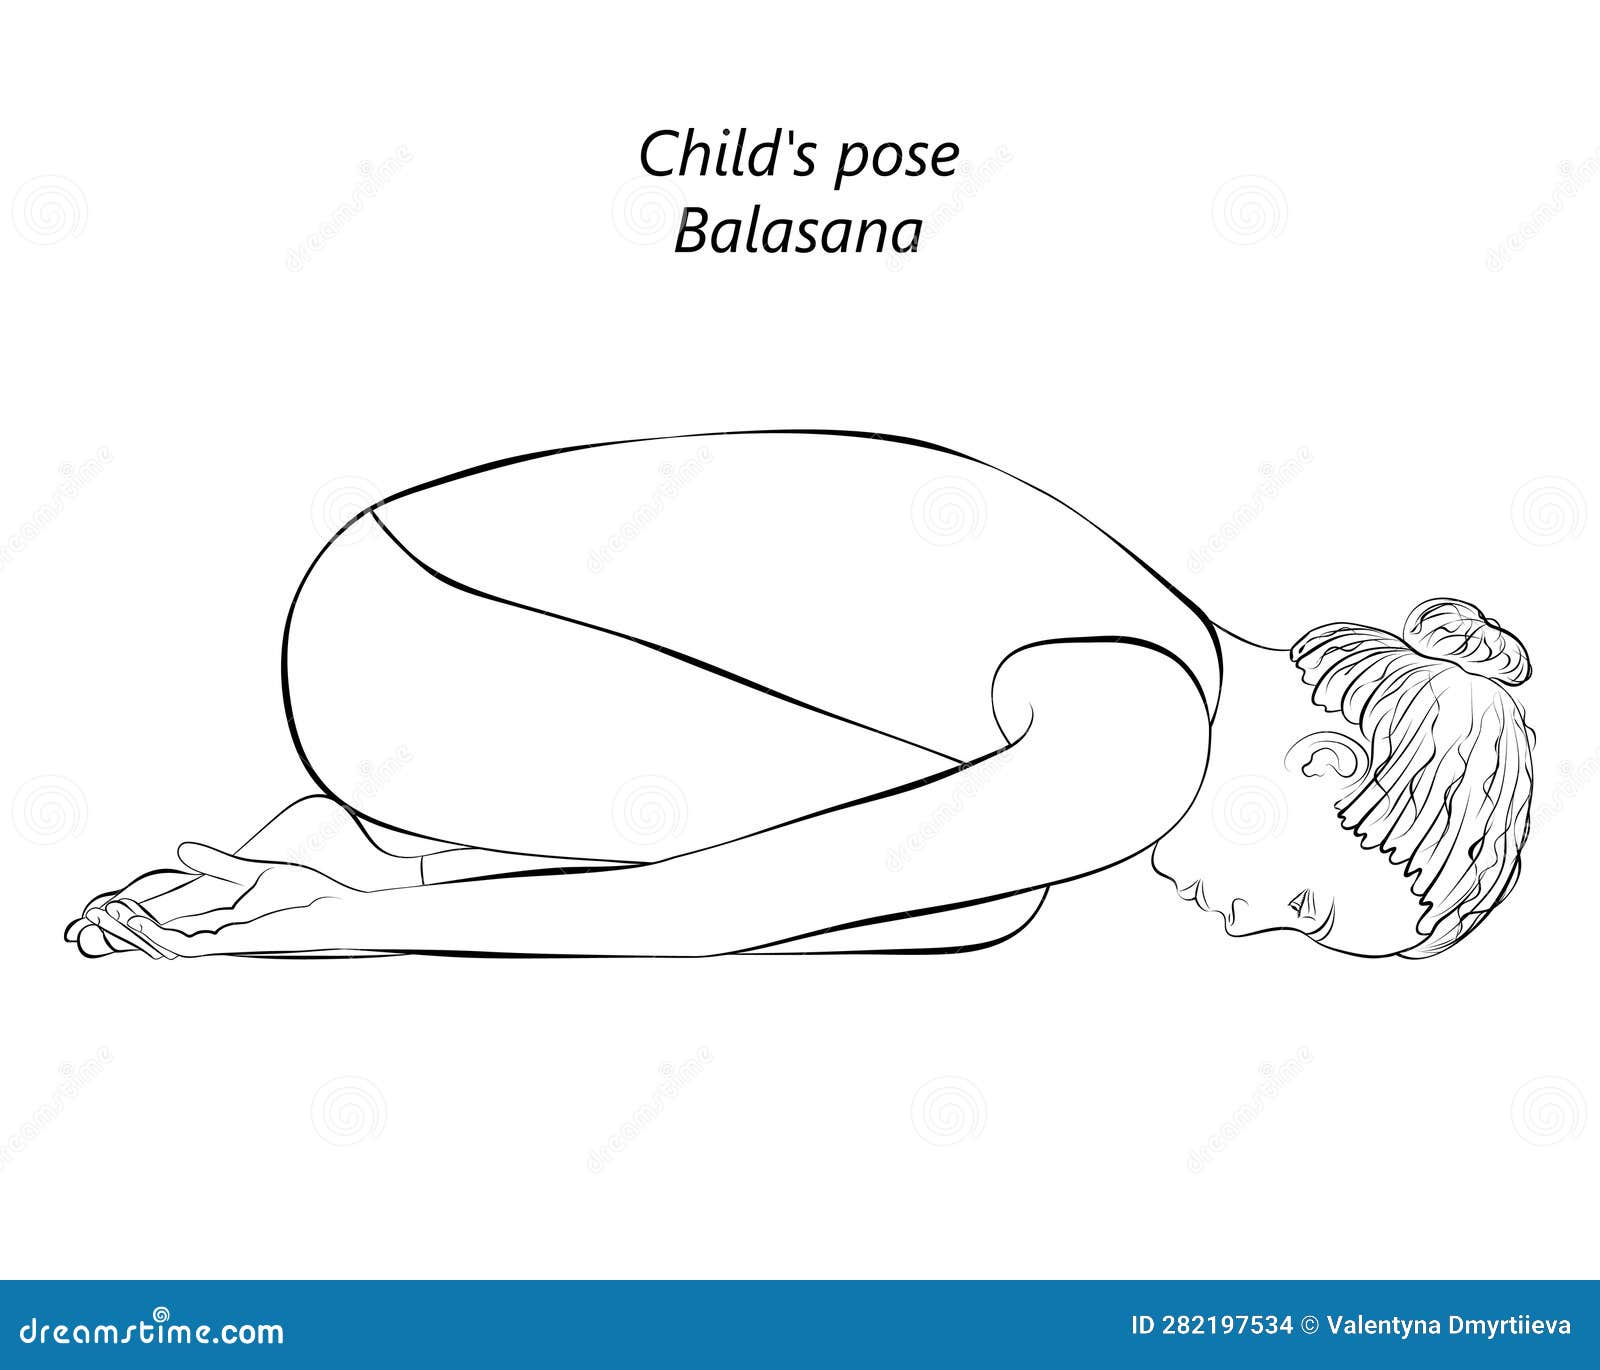 Balasana(Child Pose) Techniques and its Benefits